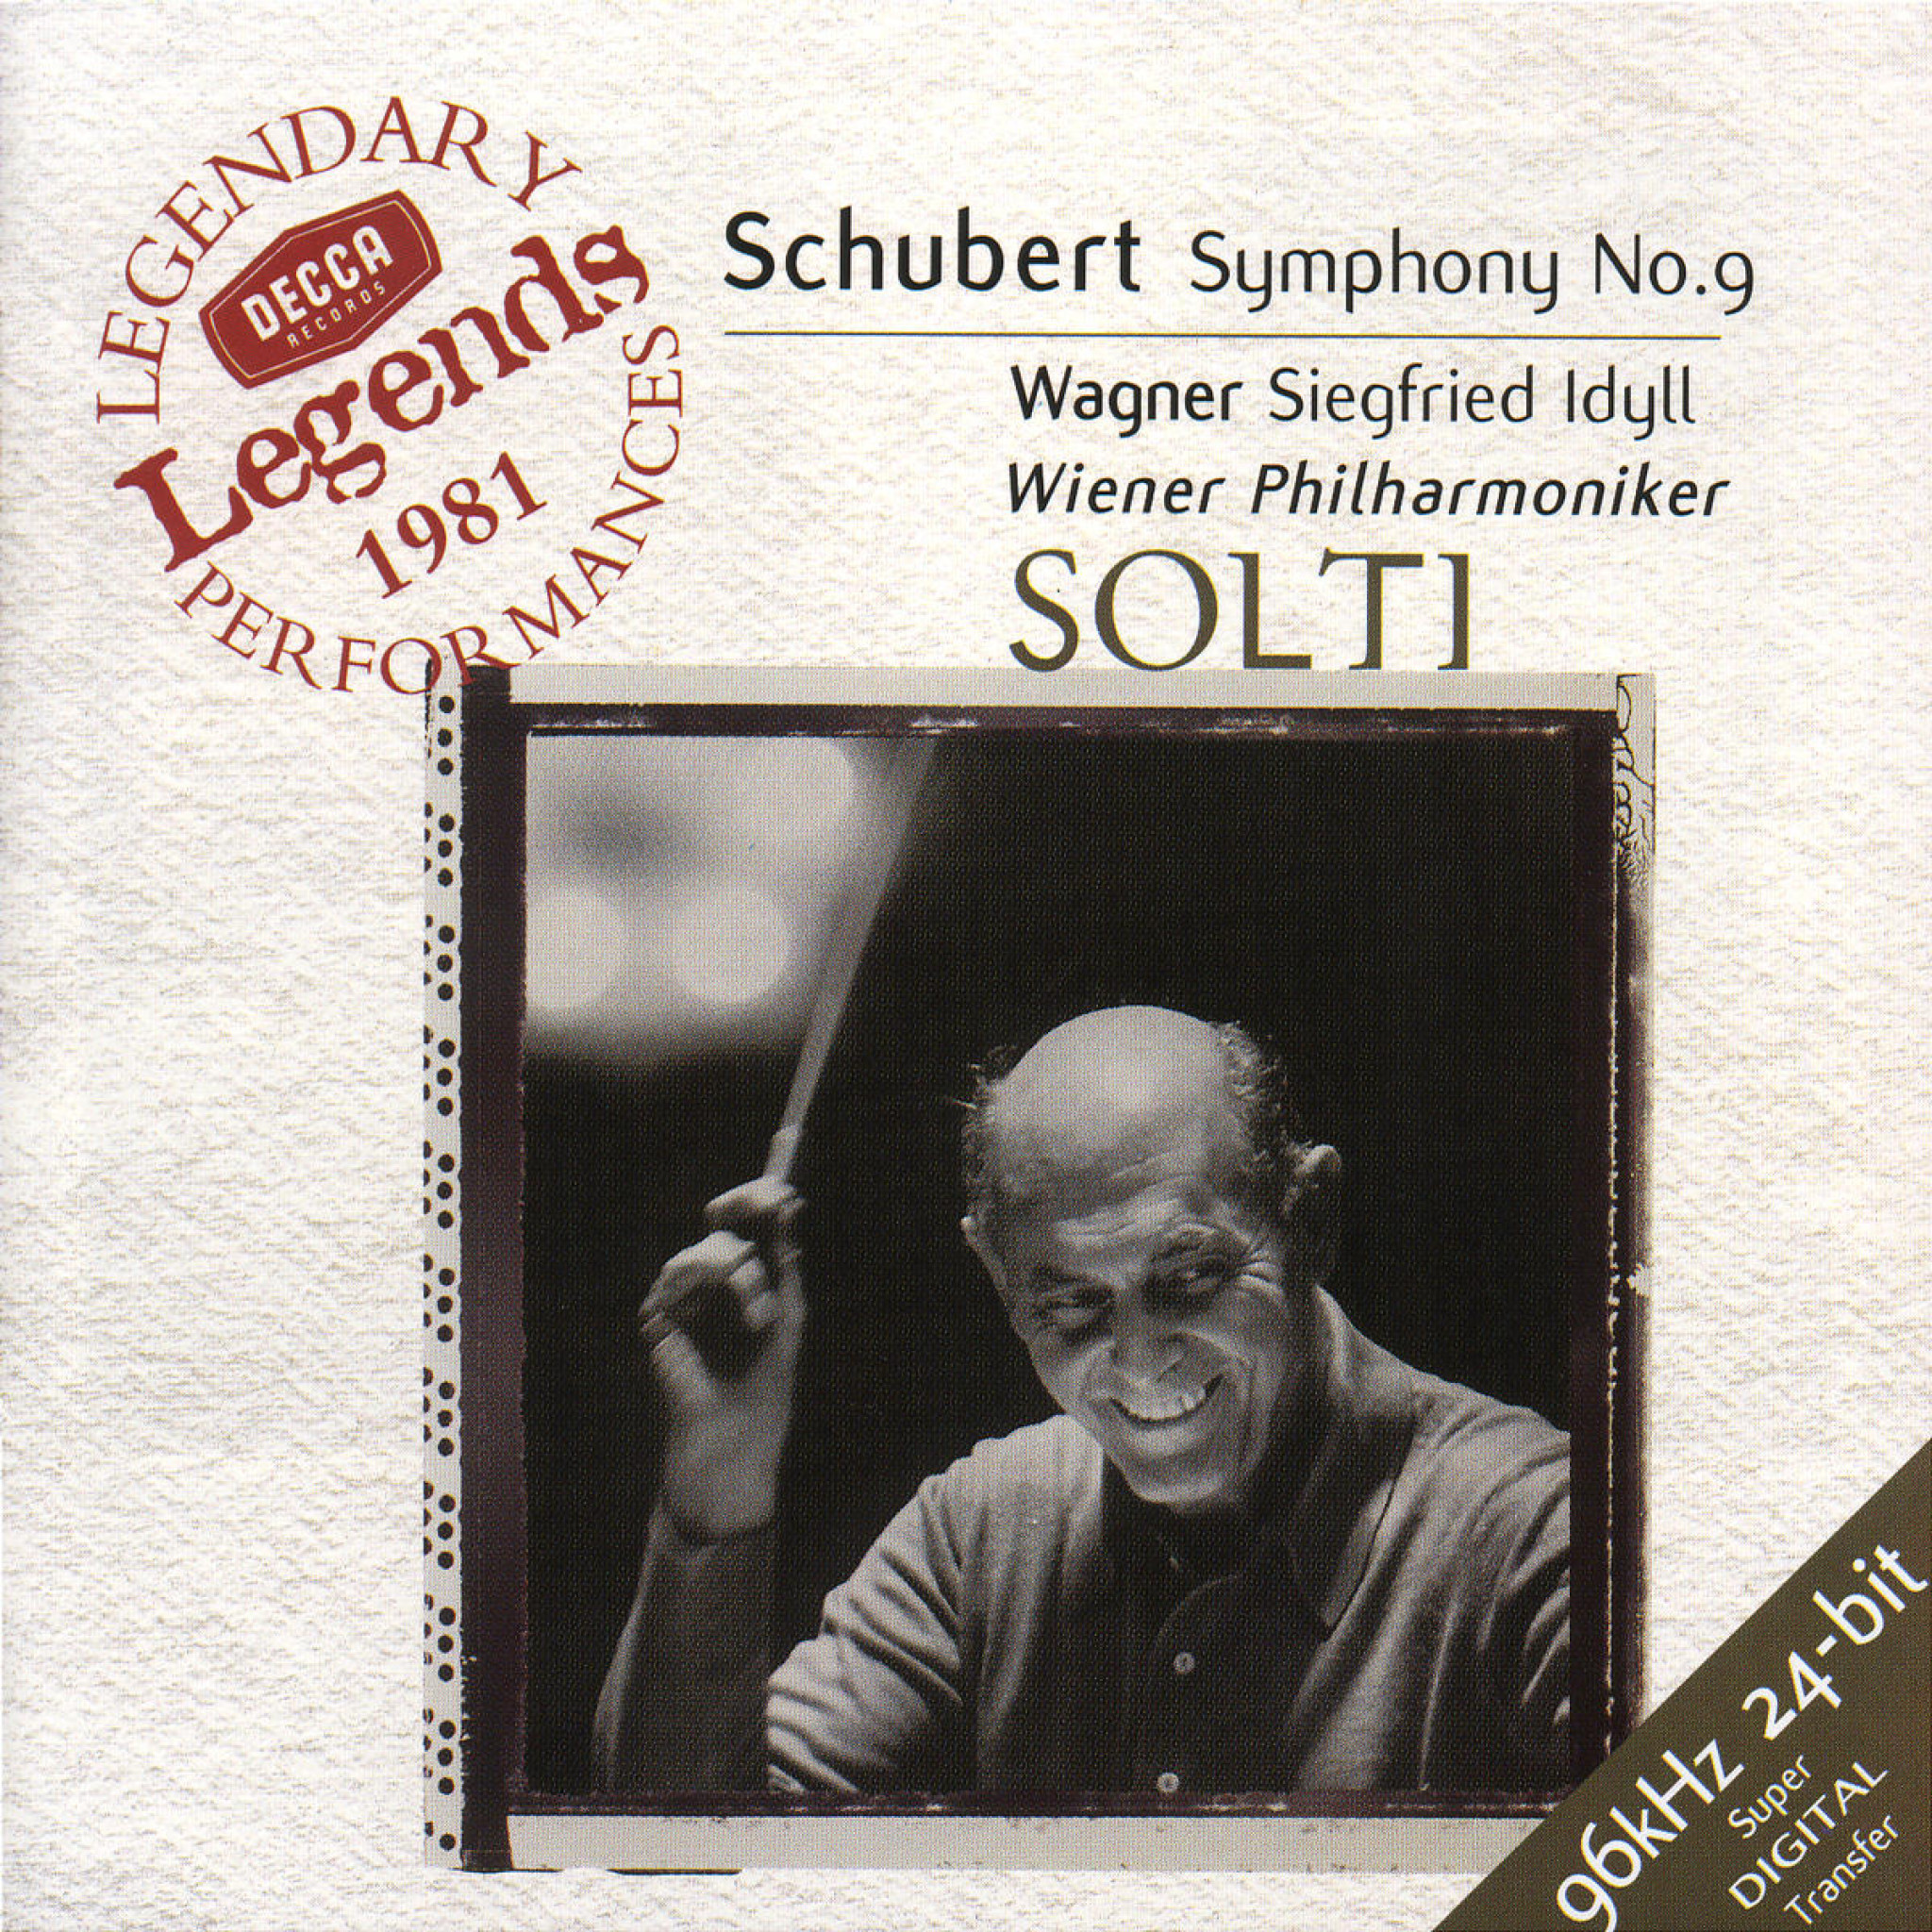 SCHUBERT Symphony no.9 + WAGNER  / Solti